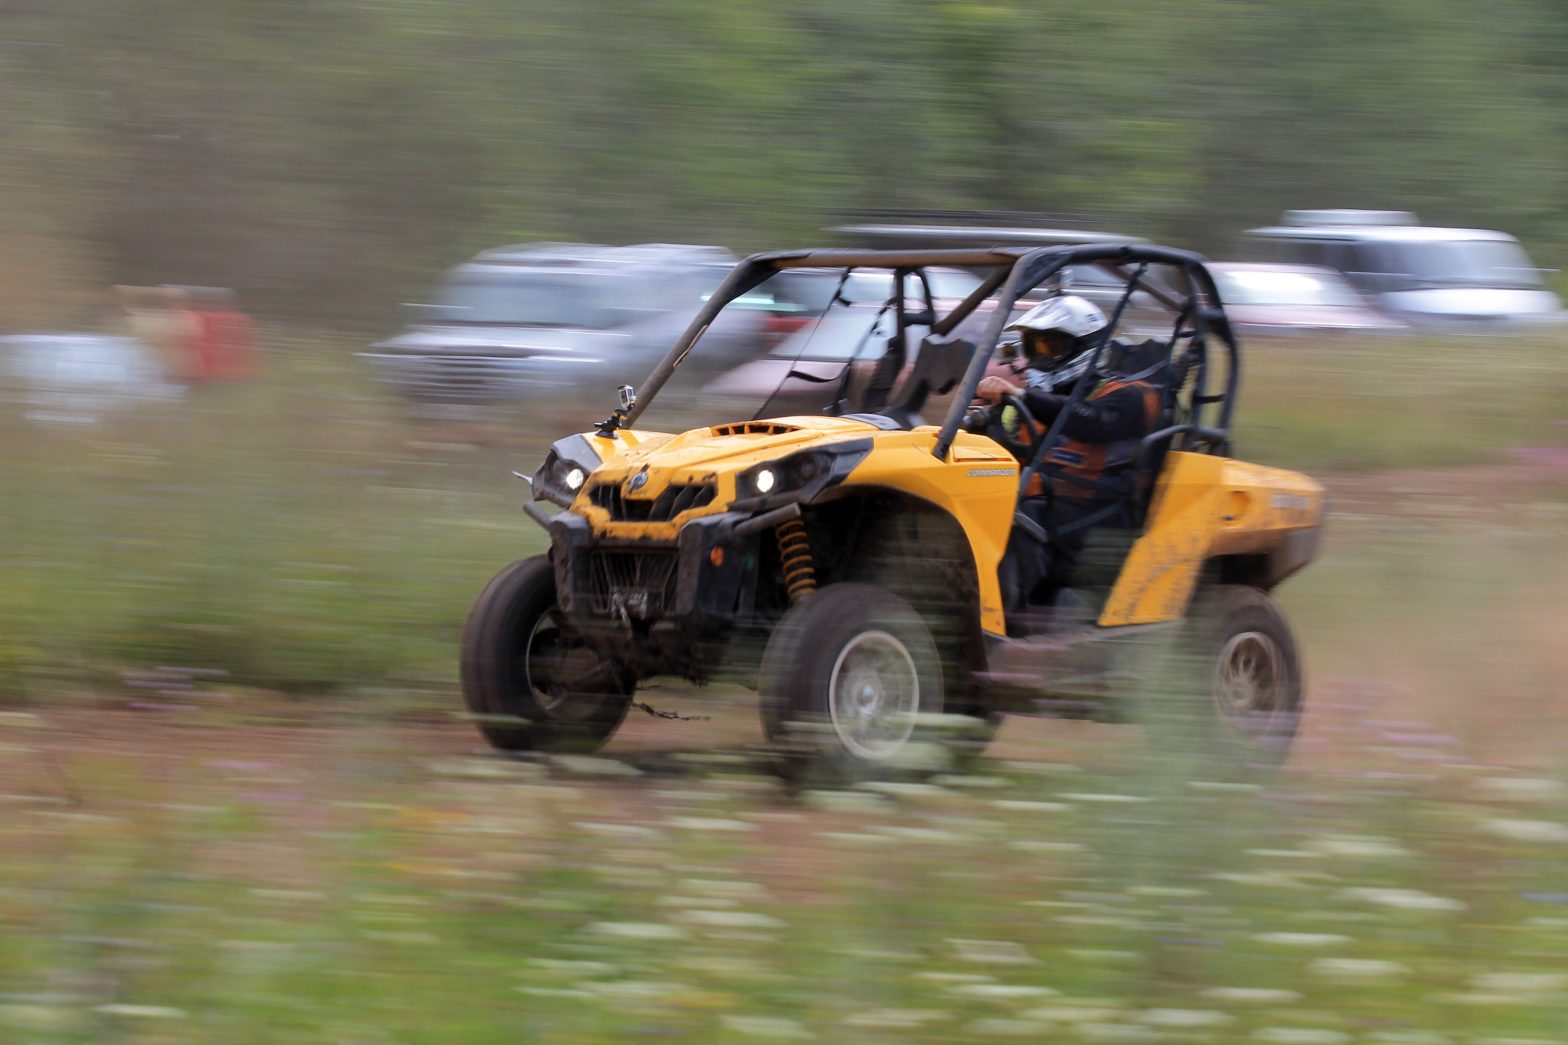 Yellow ATV in a grassy field.